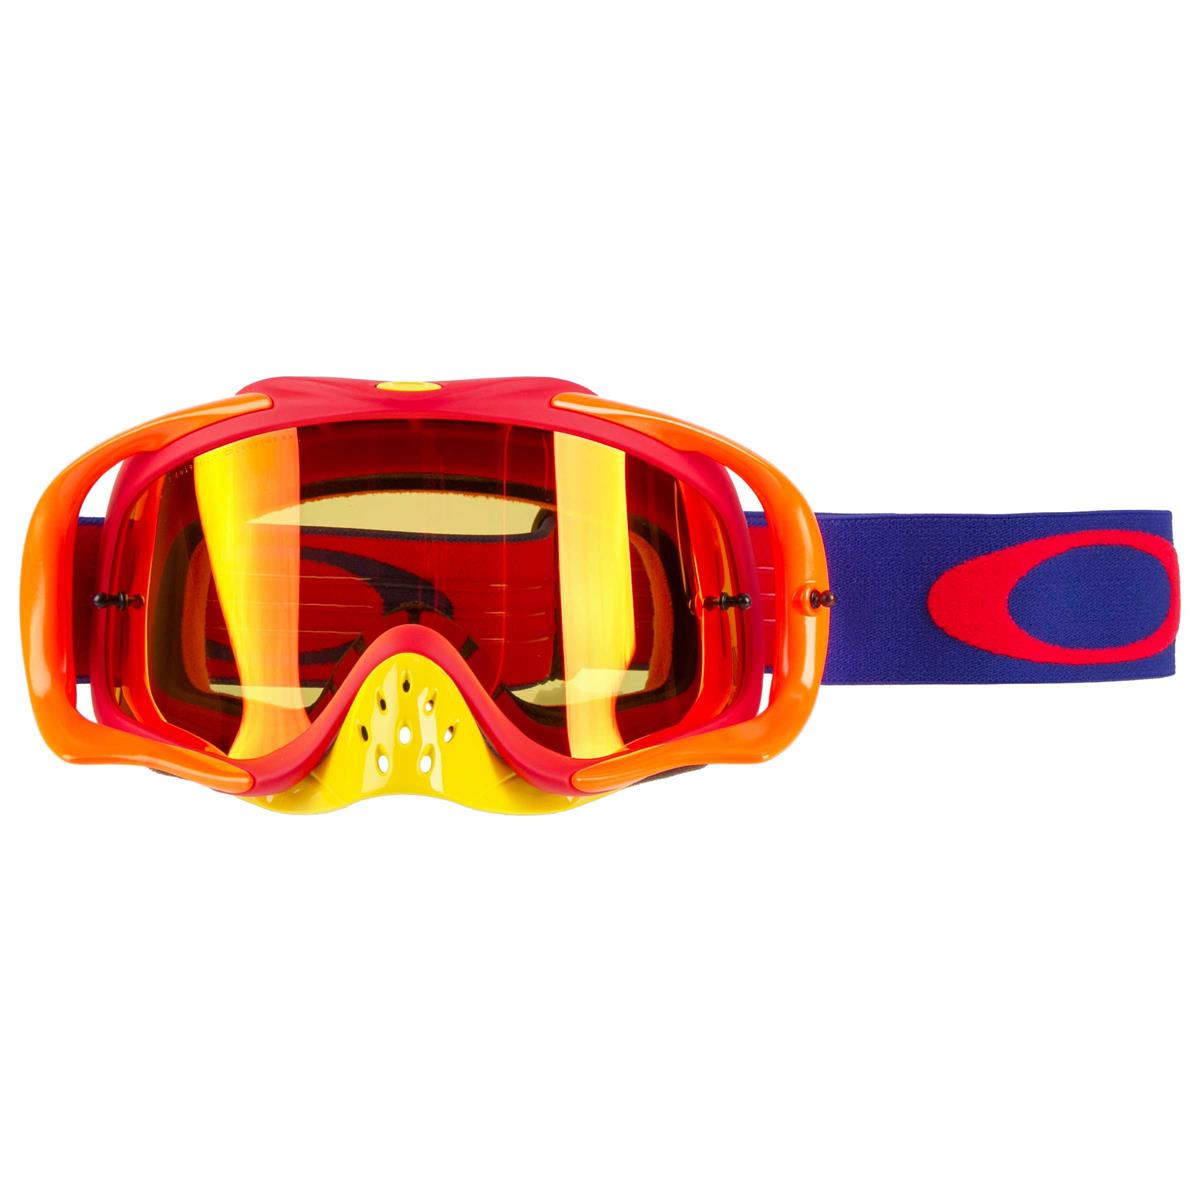 oakley goggles fire iridium